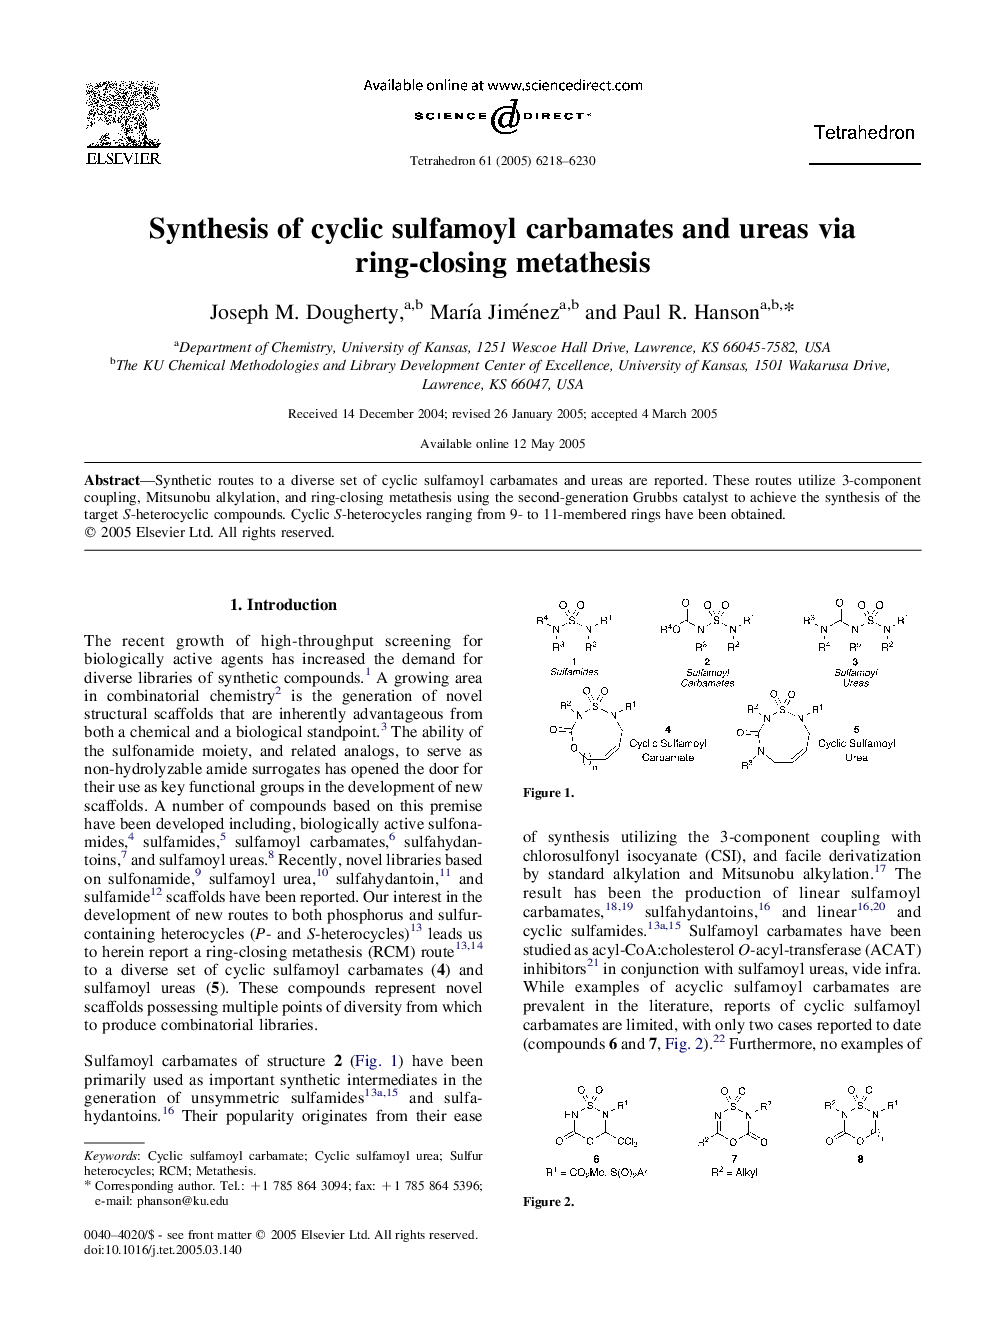 Synthesis of cyclic sulfamoyl carbamates and ureas via ring-closing metathesis